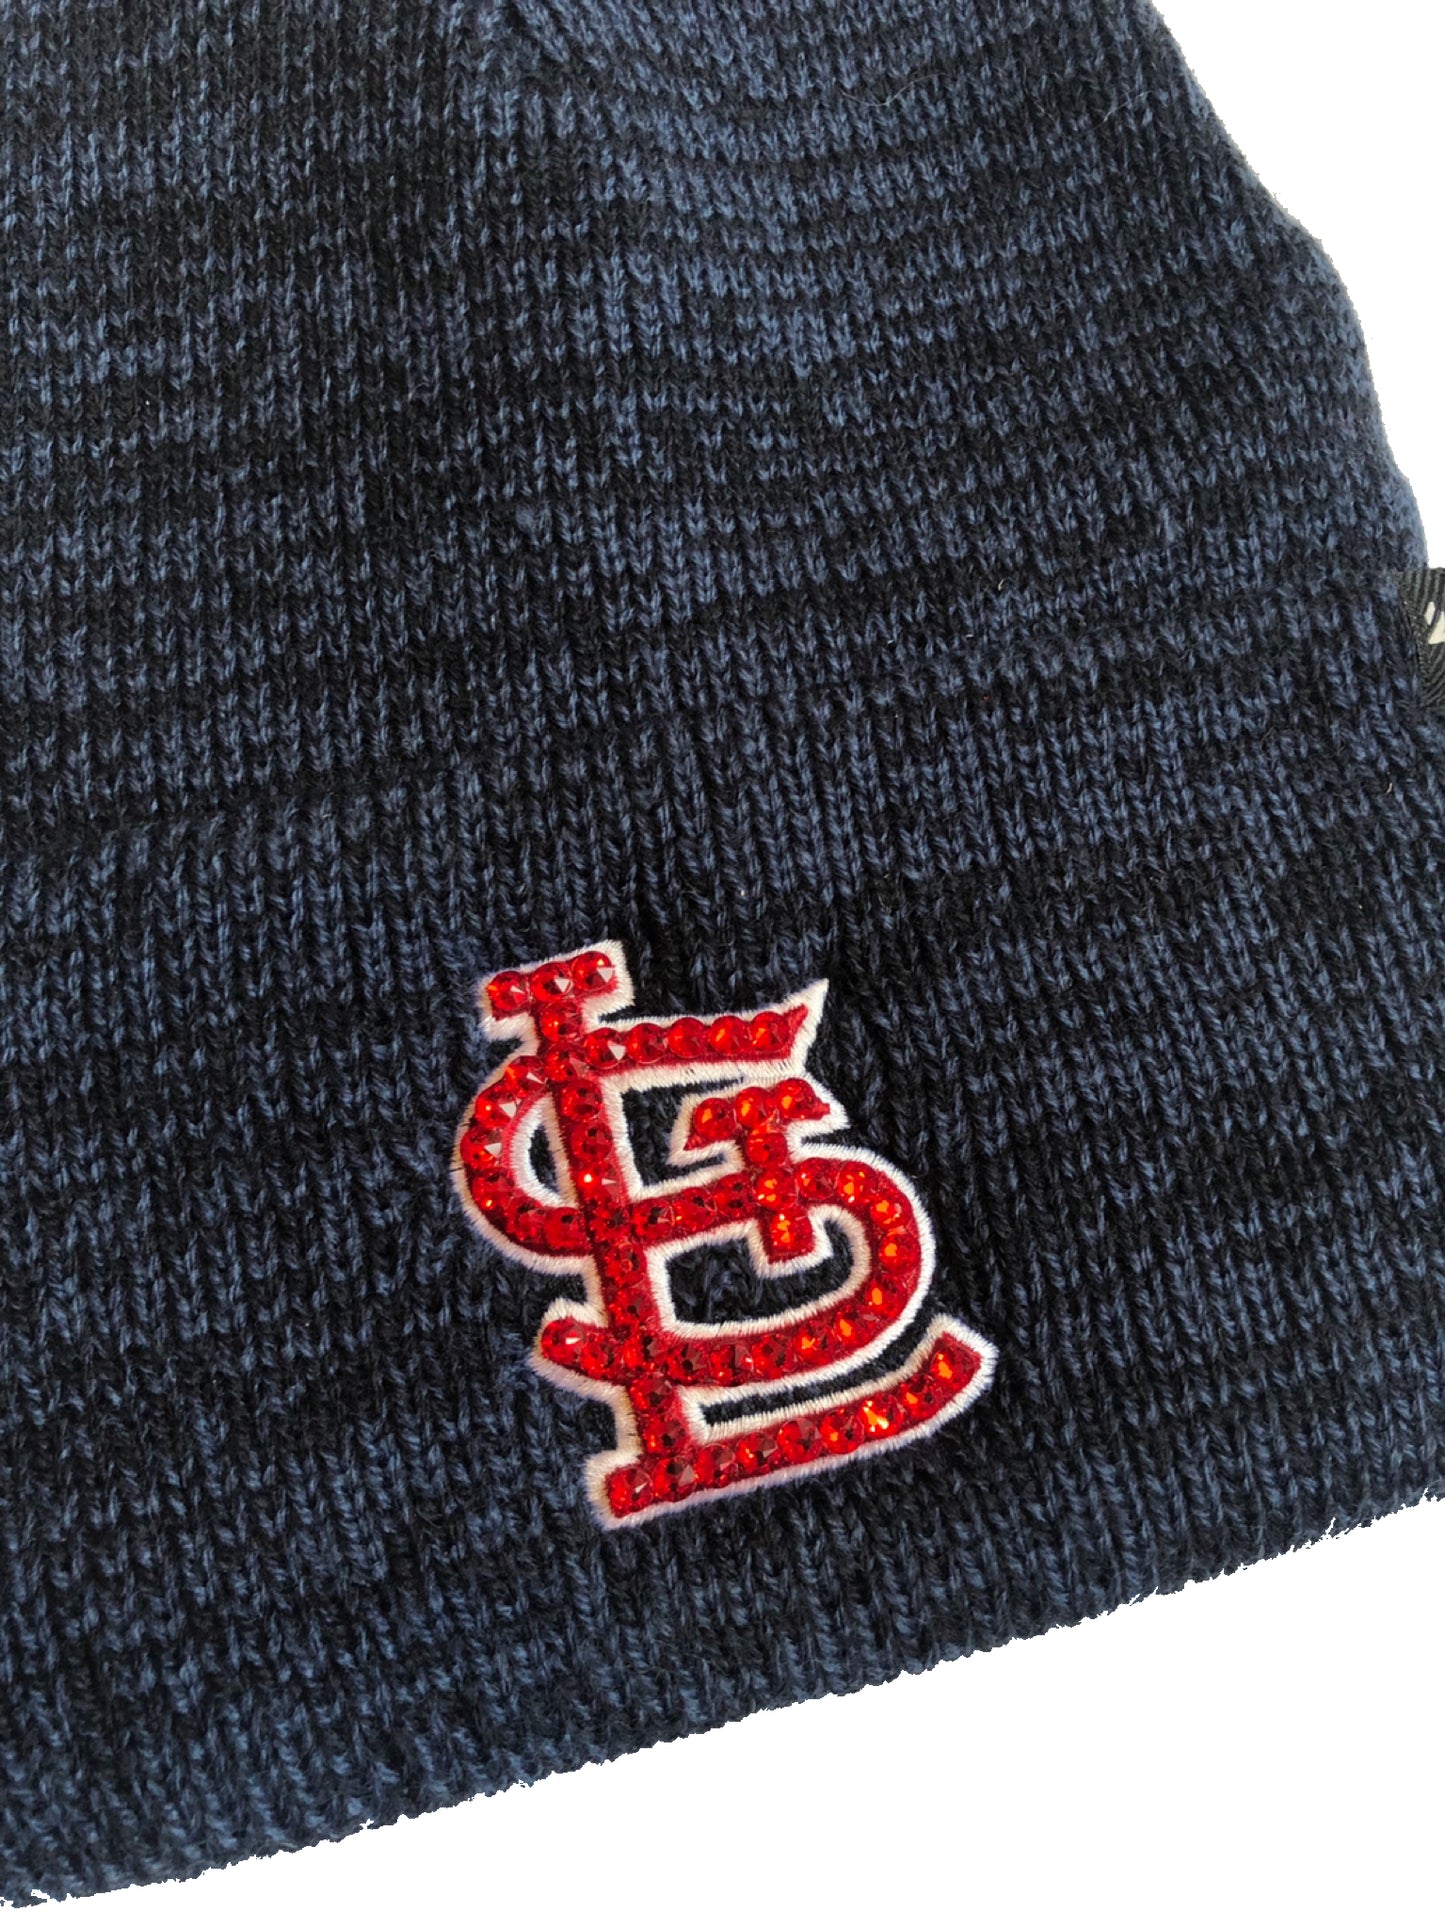 Blinged St. Louis Cardinals Beanie Knit Hat